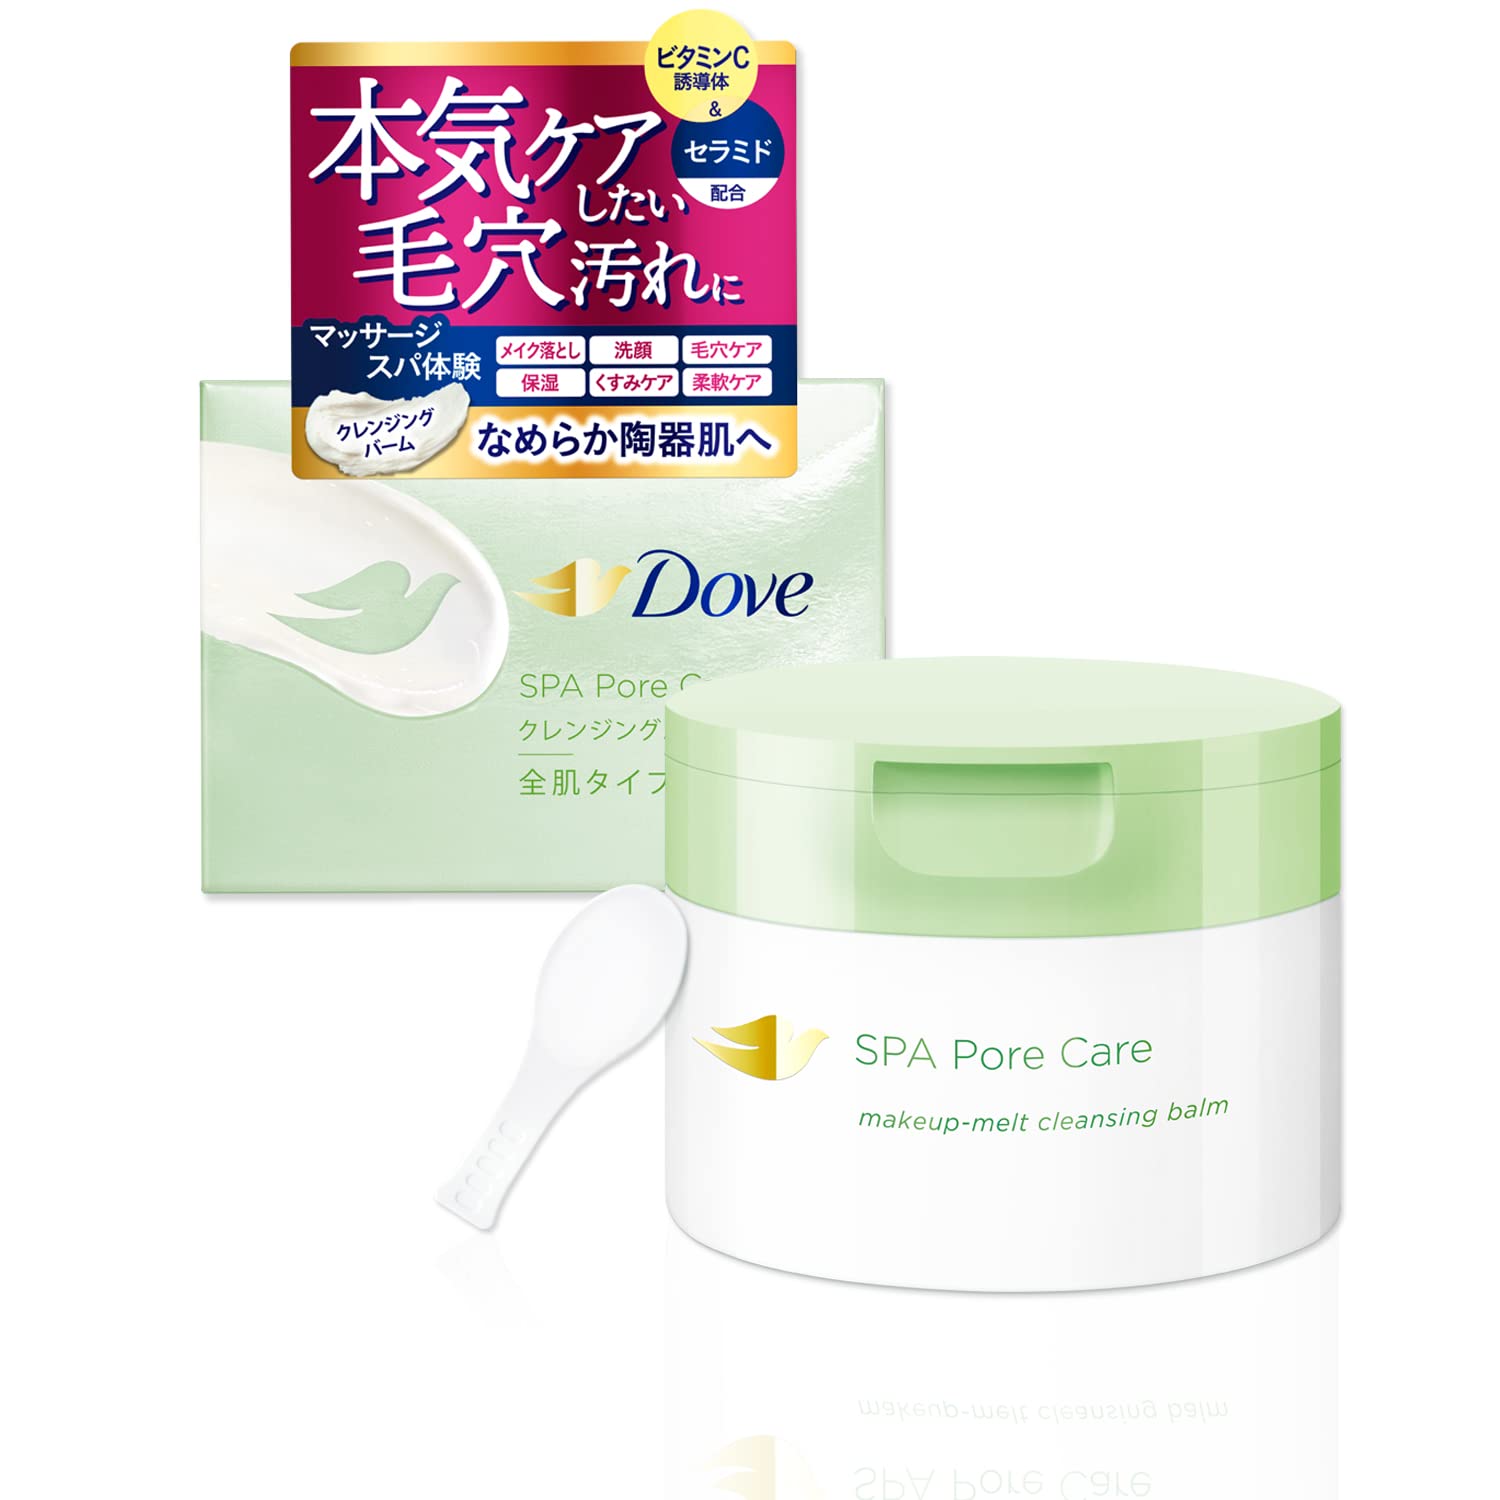 Vt Cica Renewal Serum Intensive Care 1.5ml x 28 Days - Japan Serum For Sensitive Skin